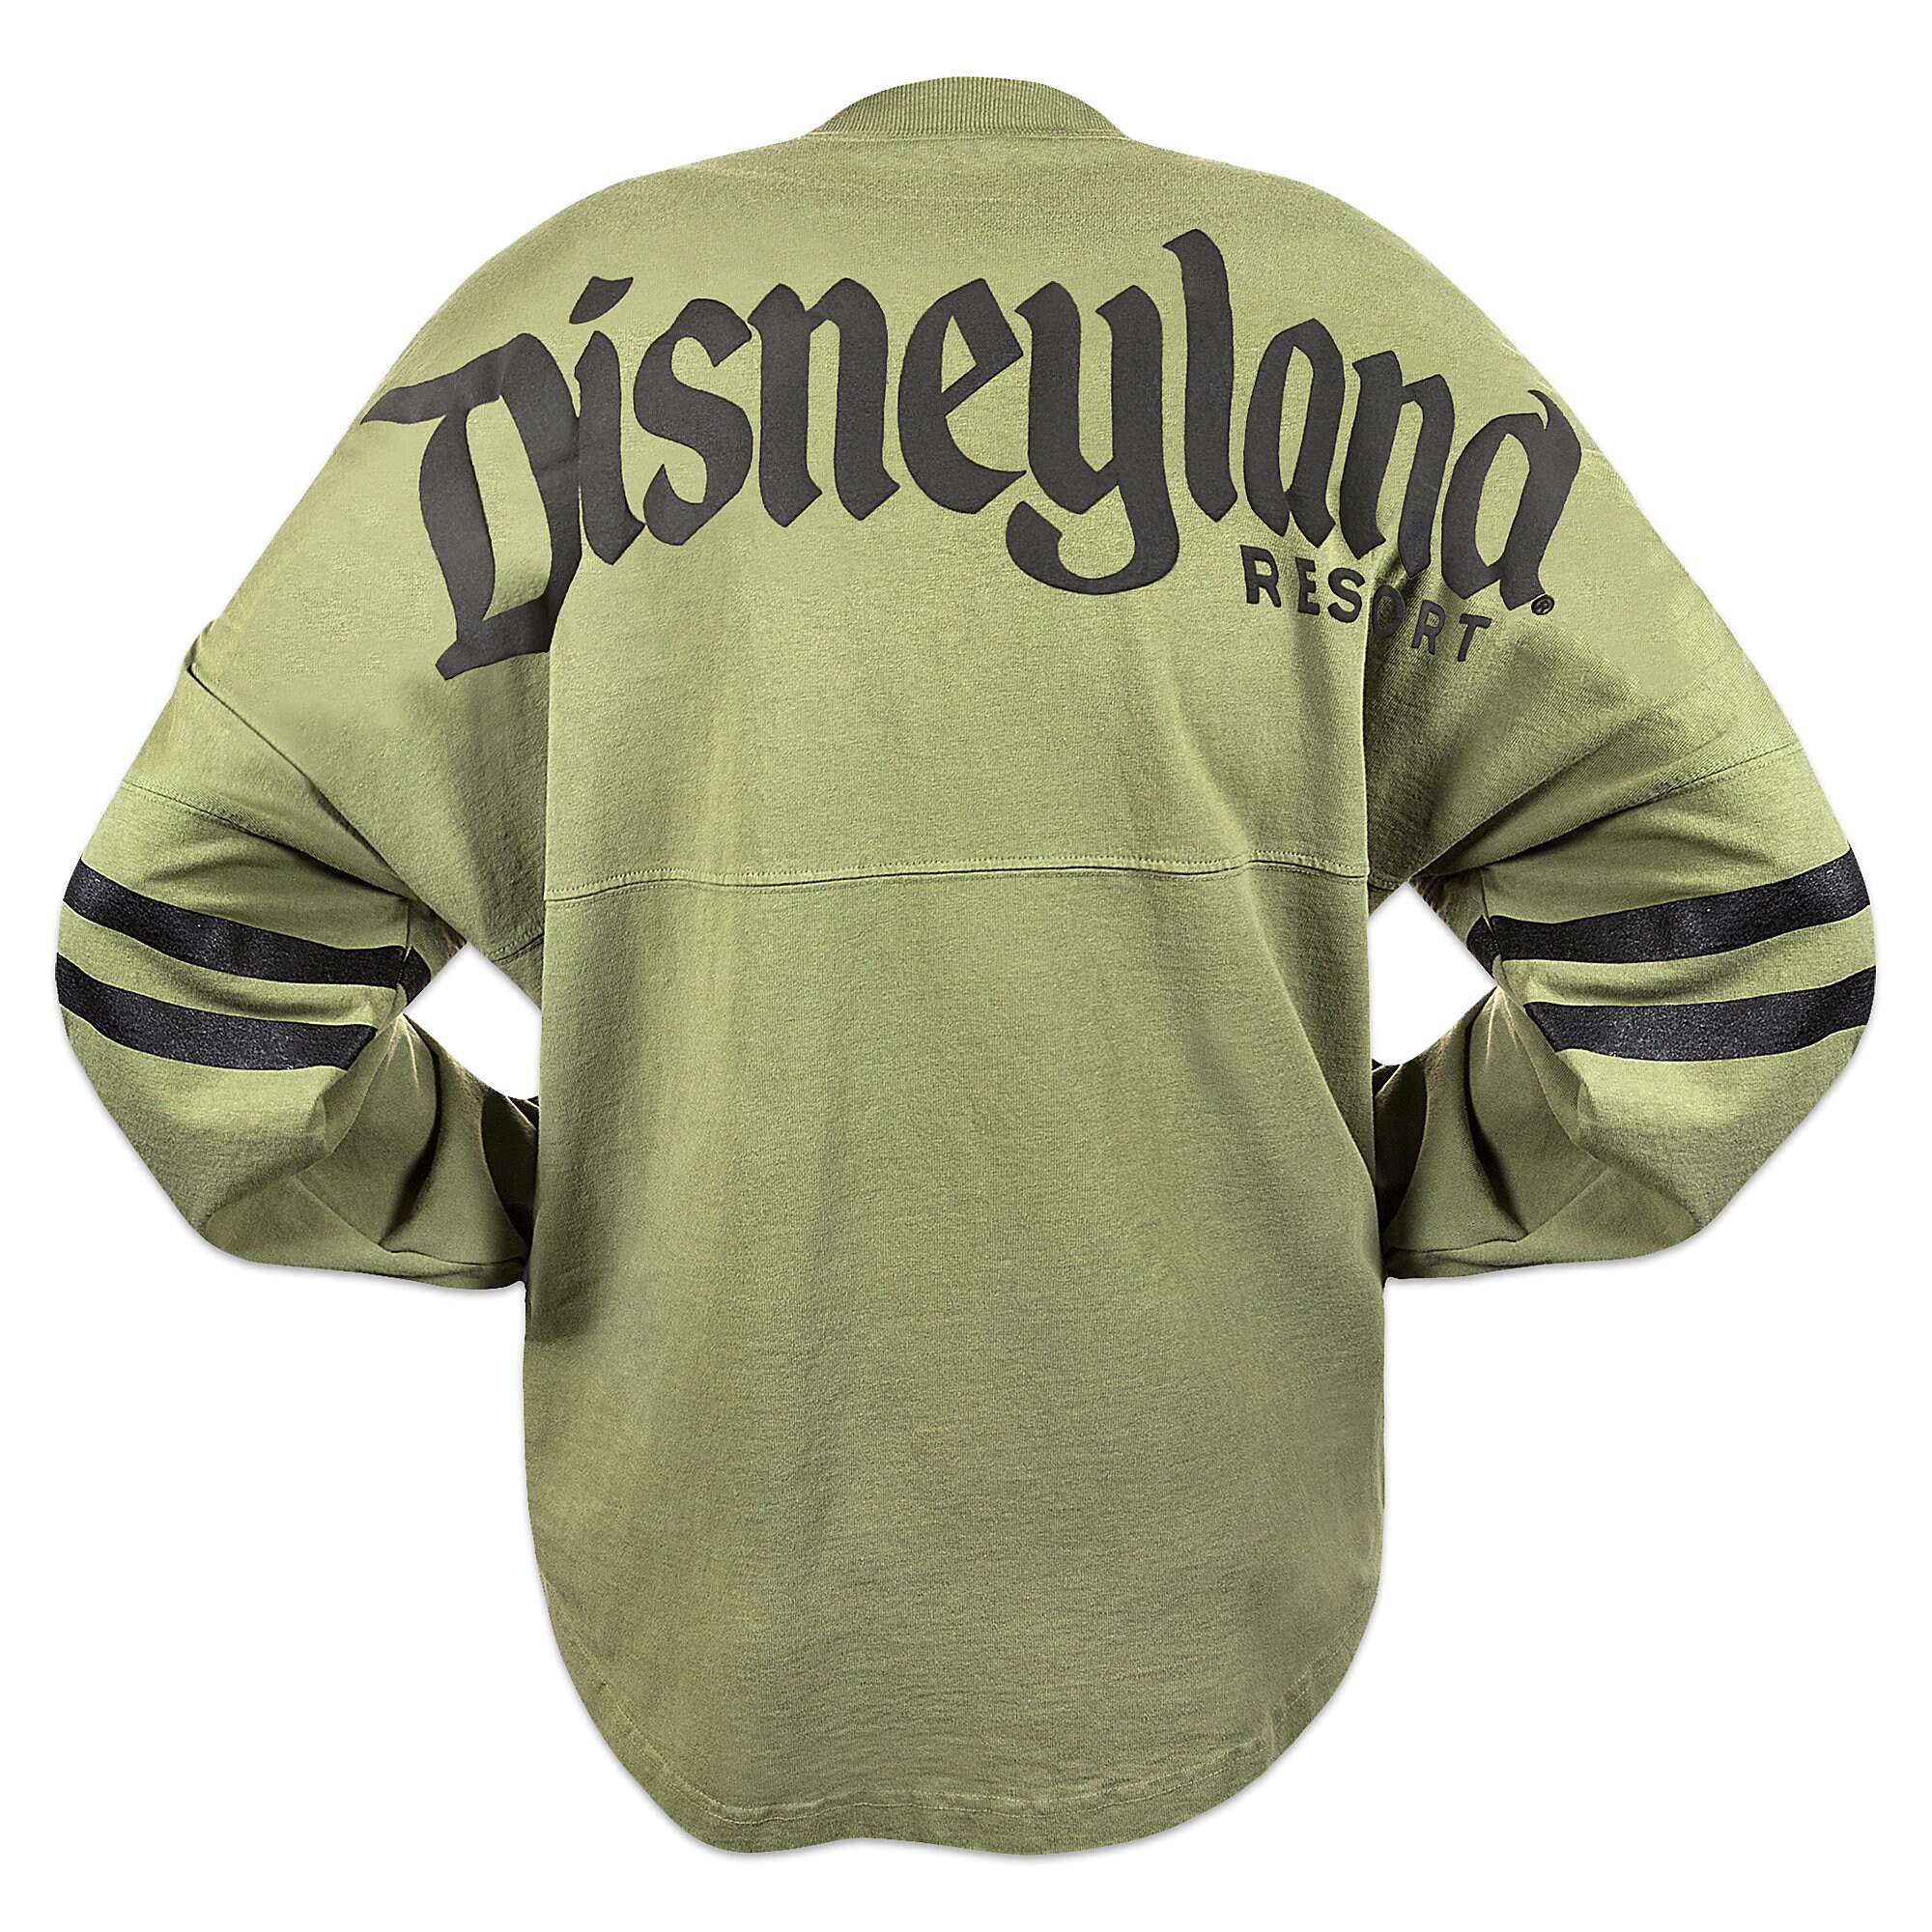 Disneyland Spirit Jersey for Adults - Green